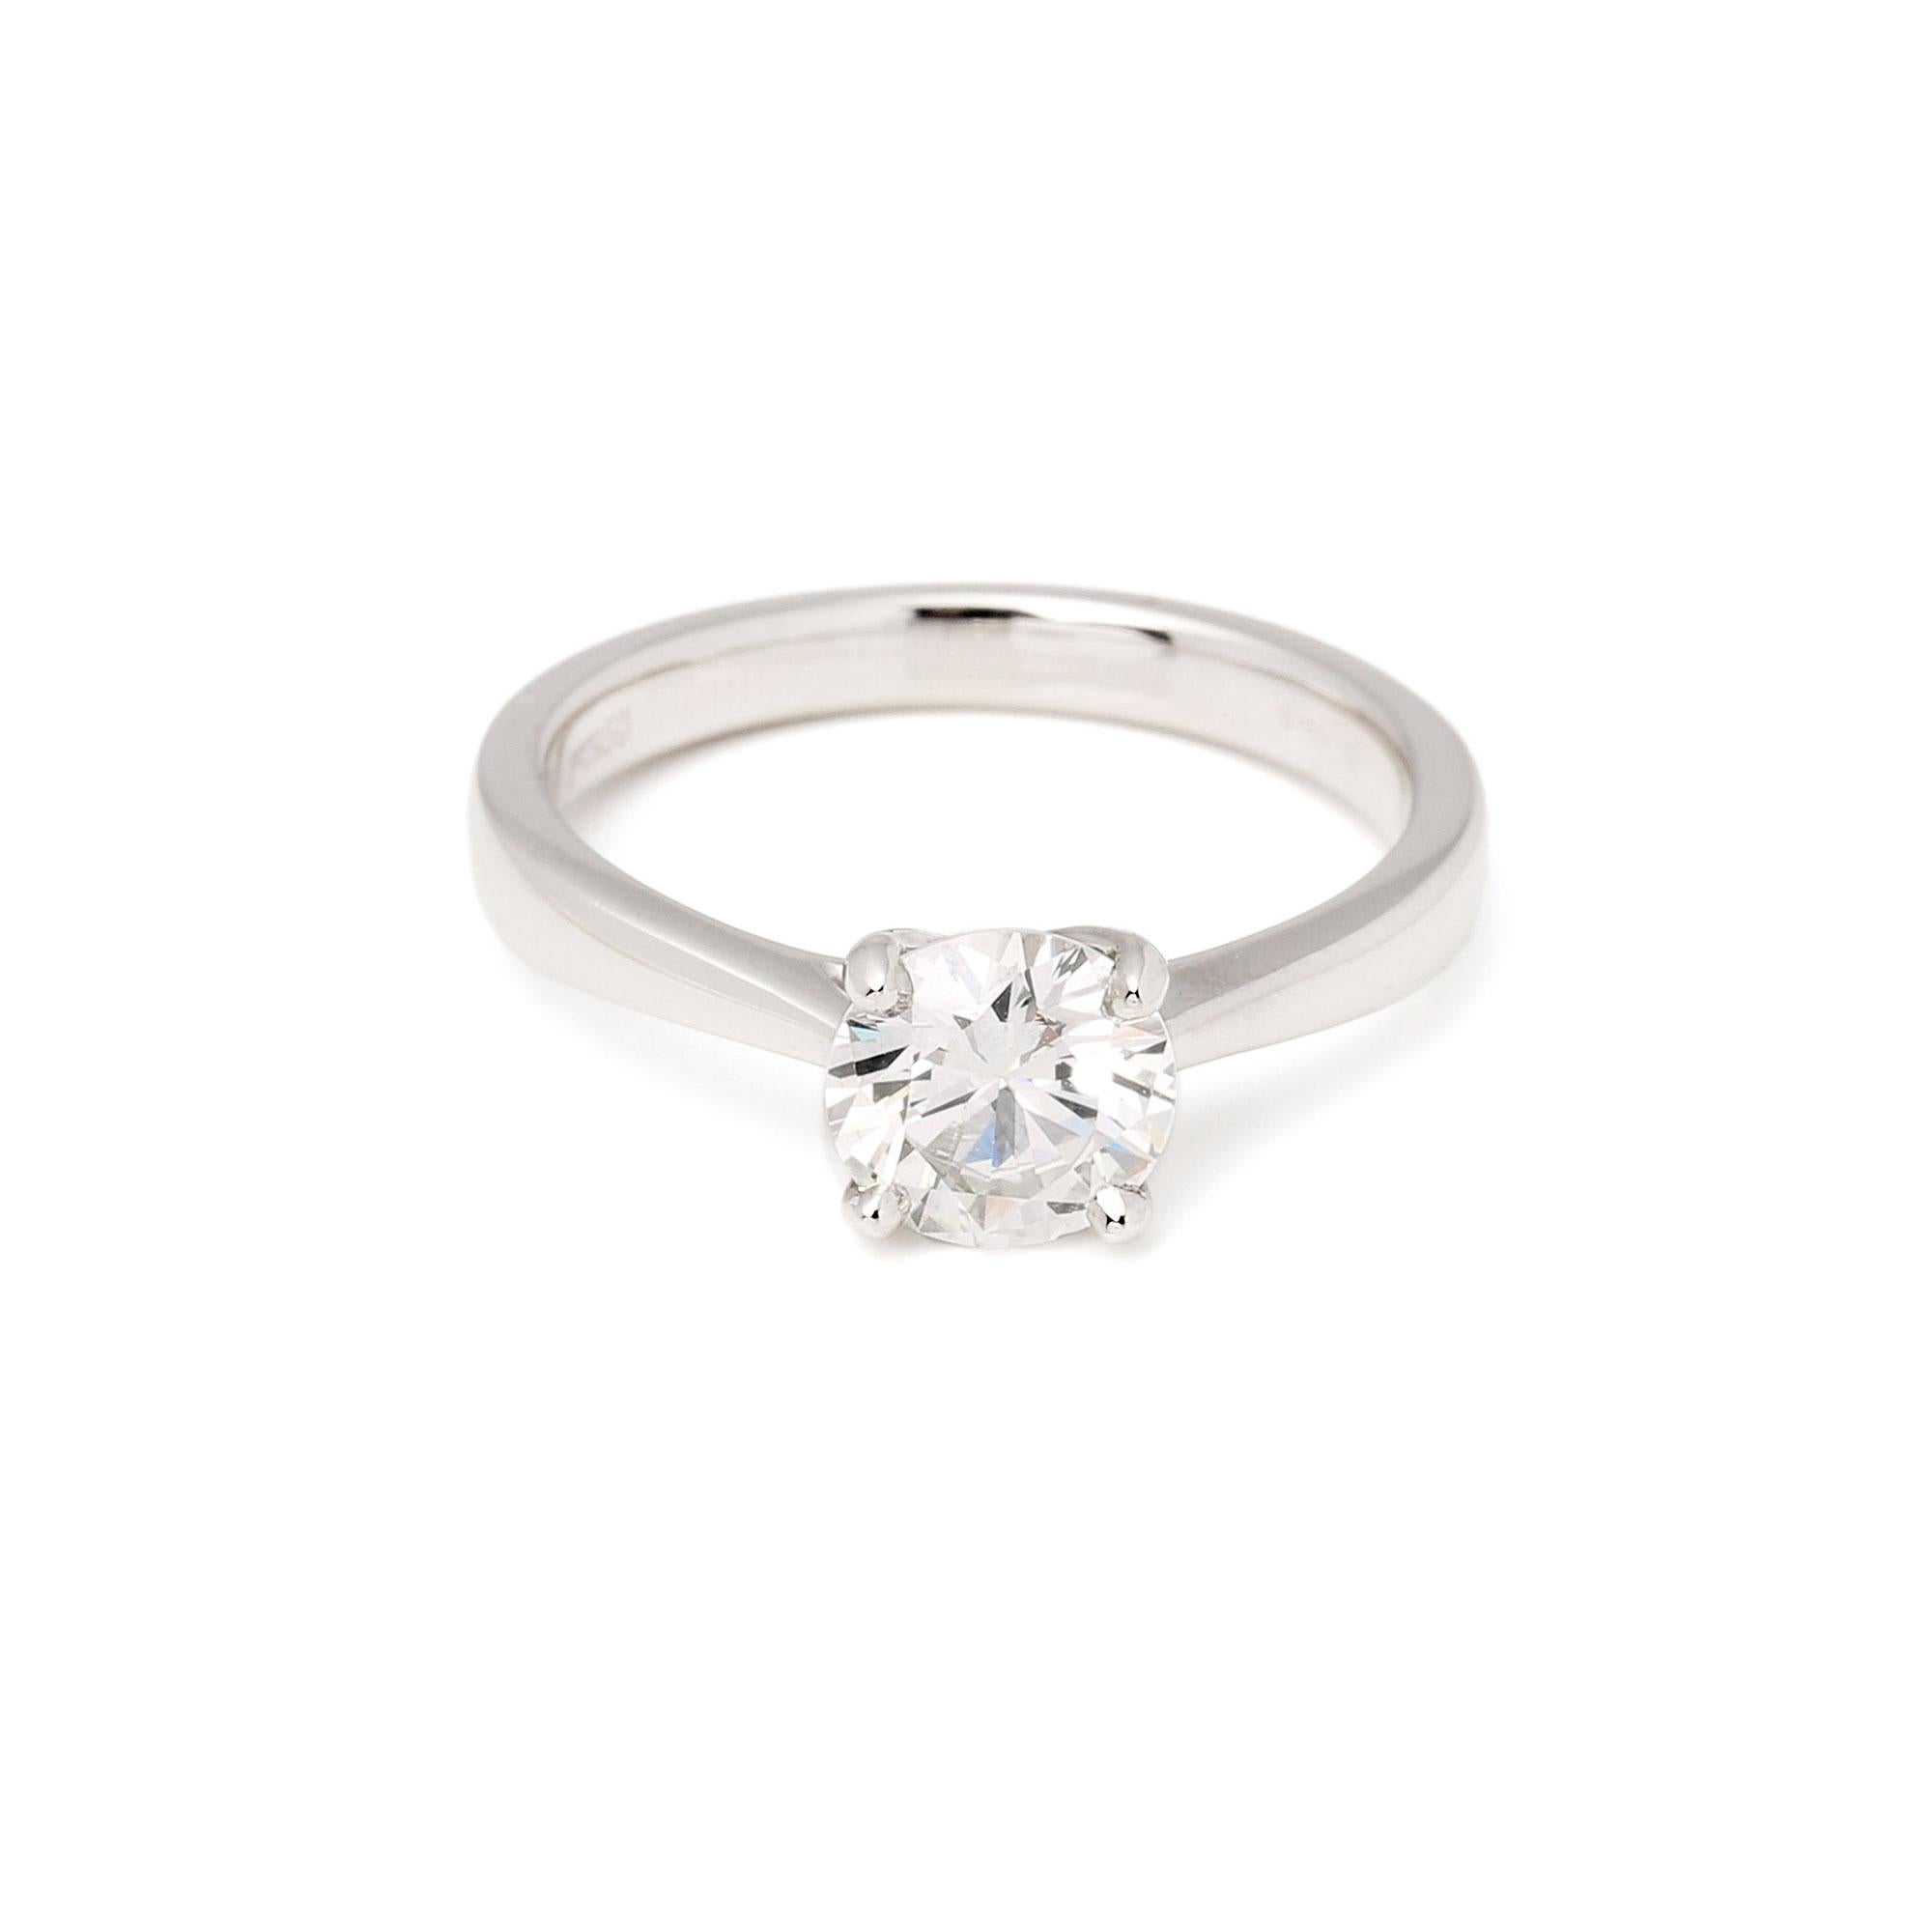 1.1 carat diamond ring